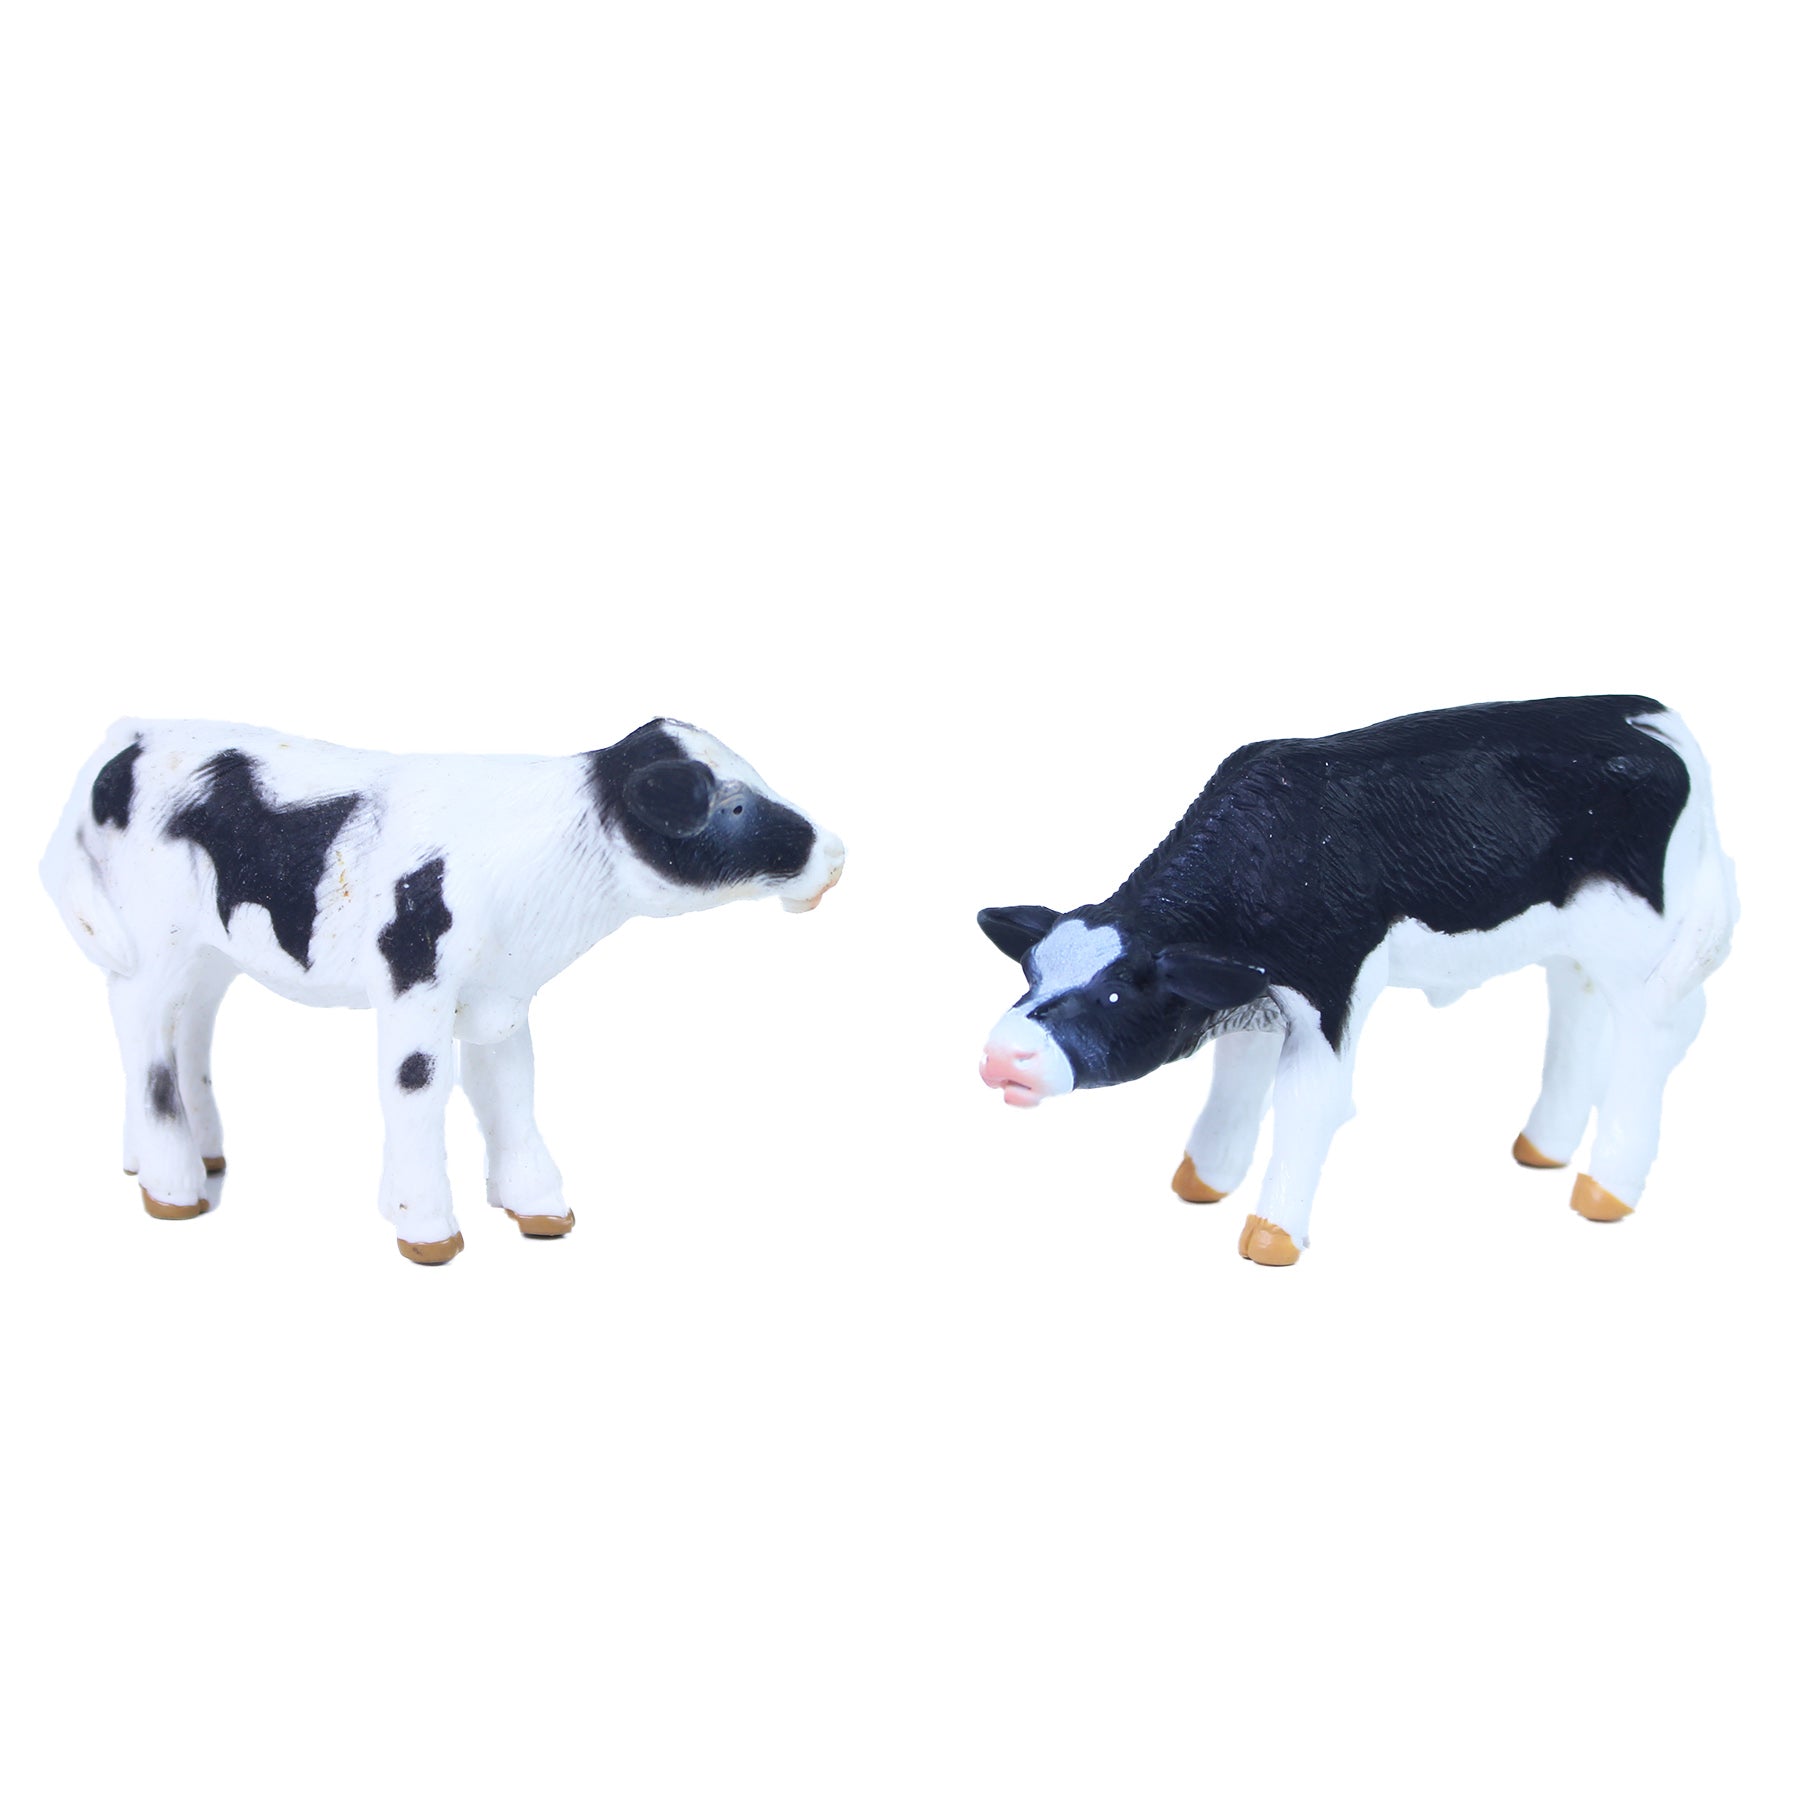 Zvirata na farme - 2 v 1 kravy | Czech Toys | czechmovie